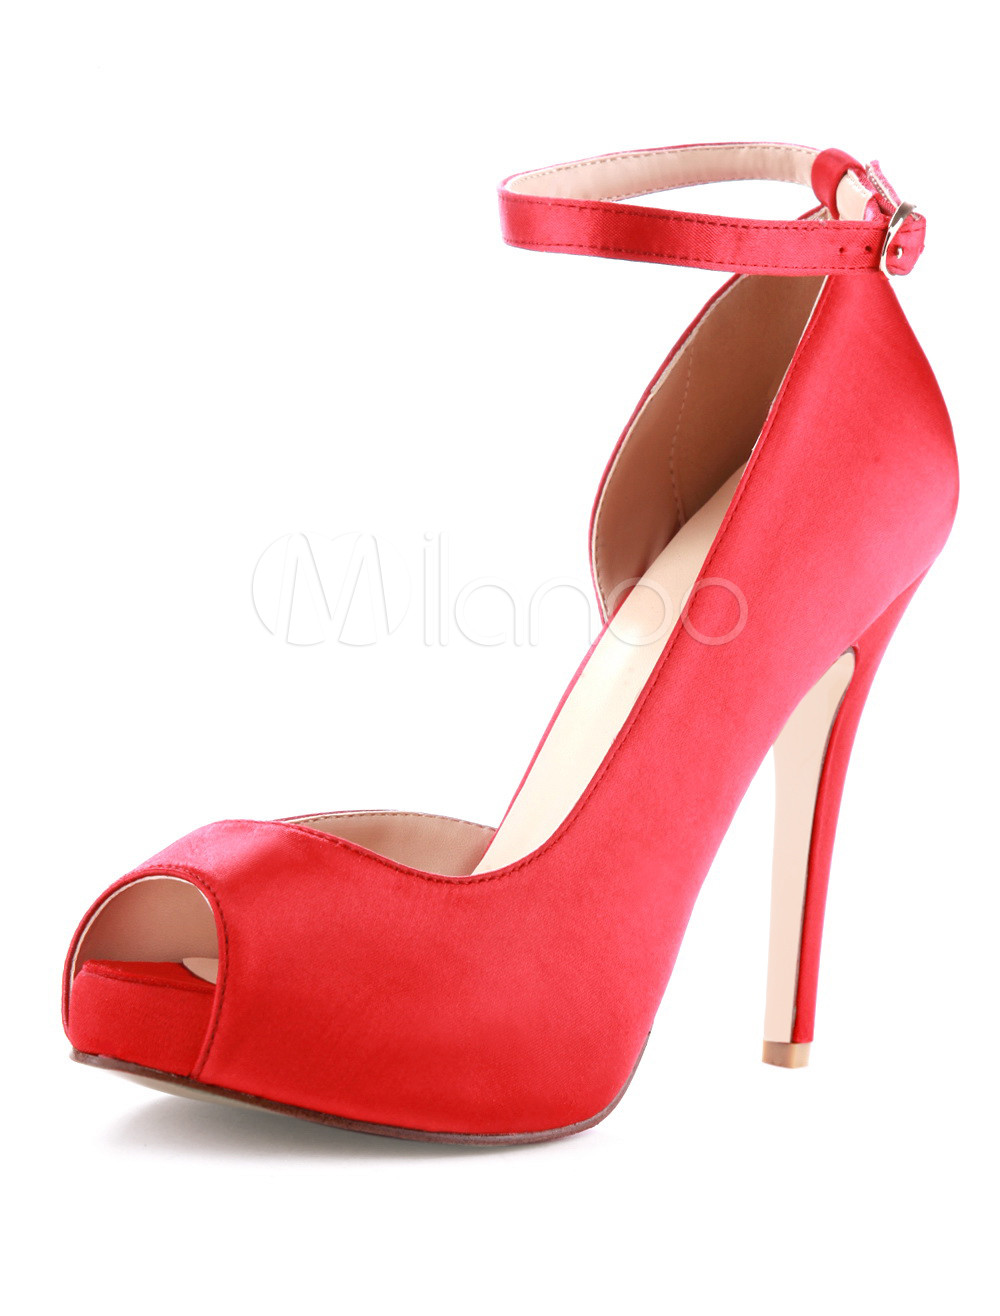 Red Peep High Heels Platform Ankle Strap Women's Pumps Shoes - Milanoo.com